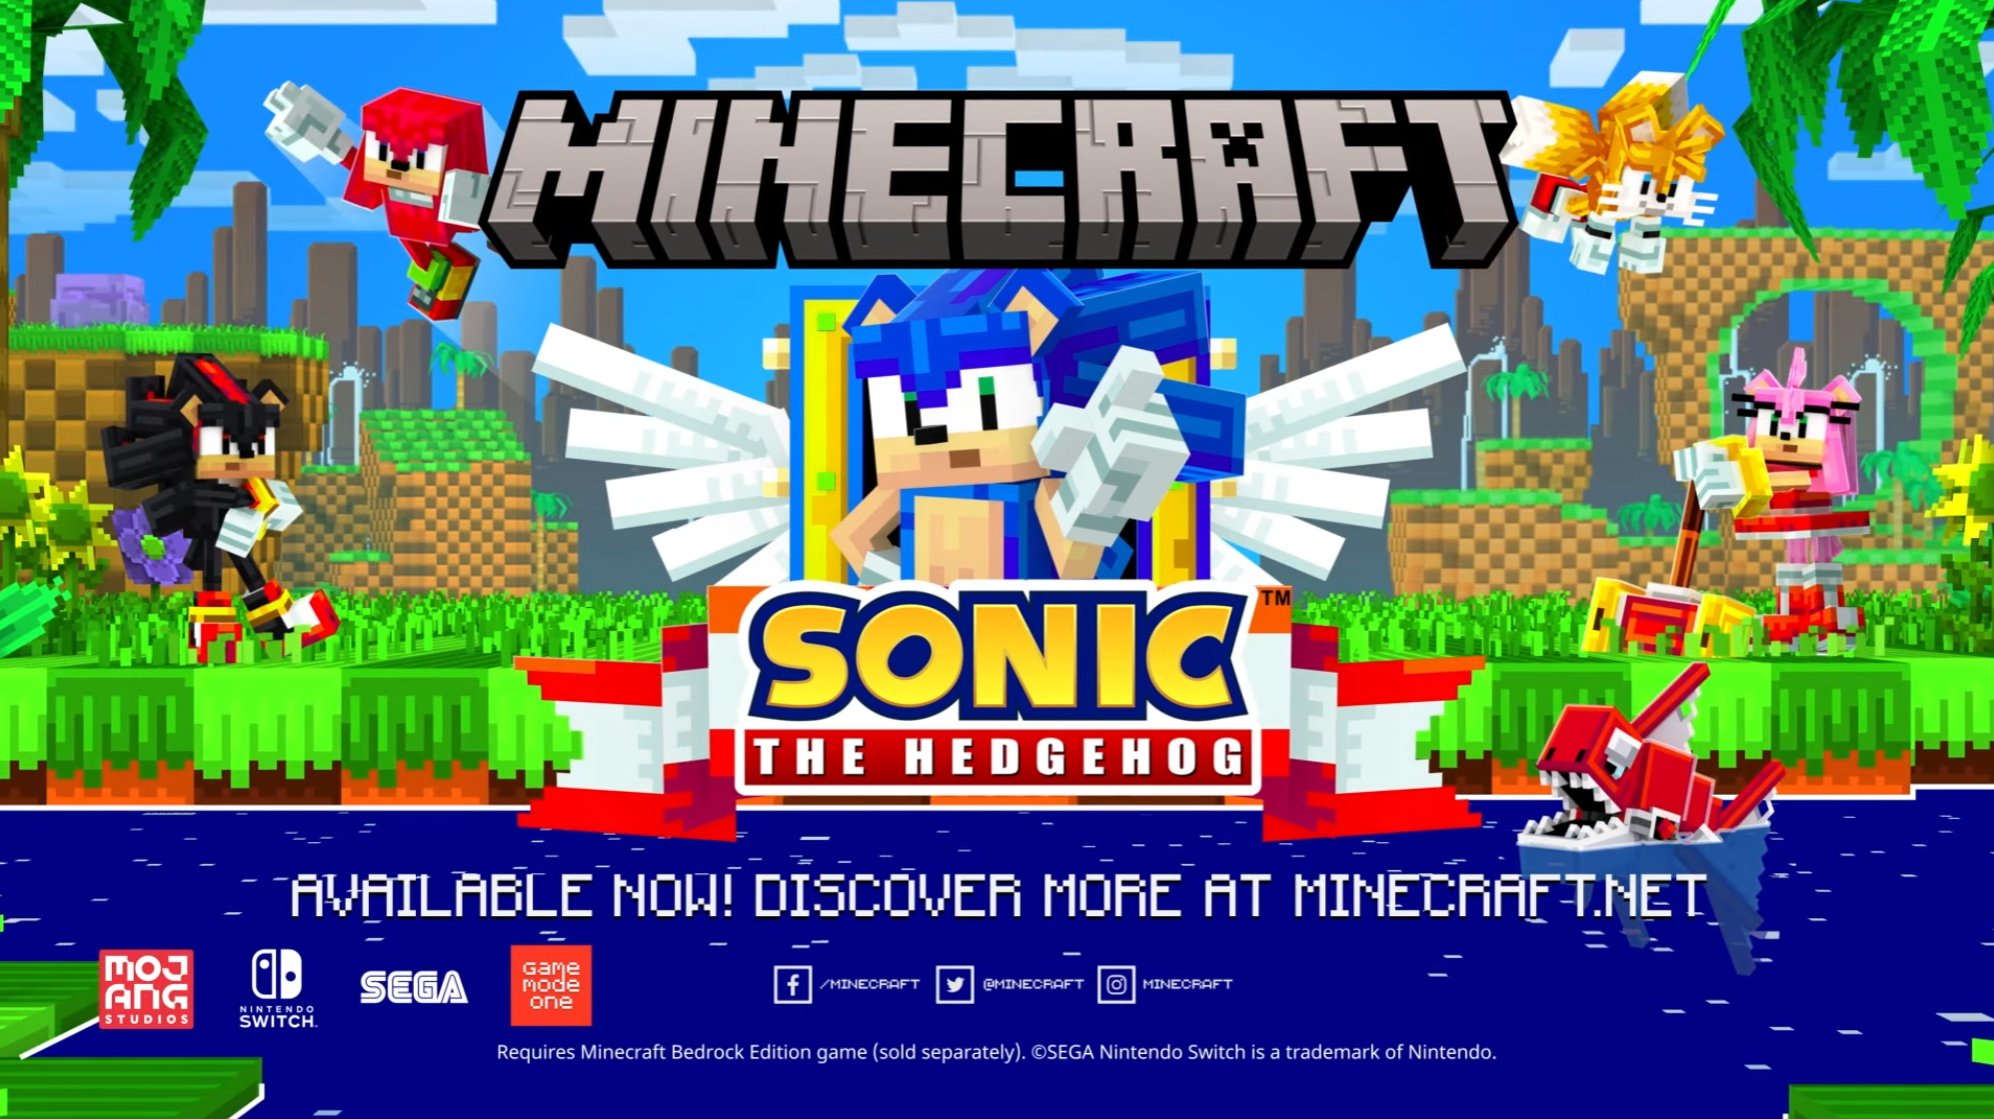 Minecraft Sonic the Hedgehog DLC Announced